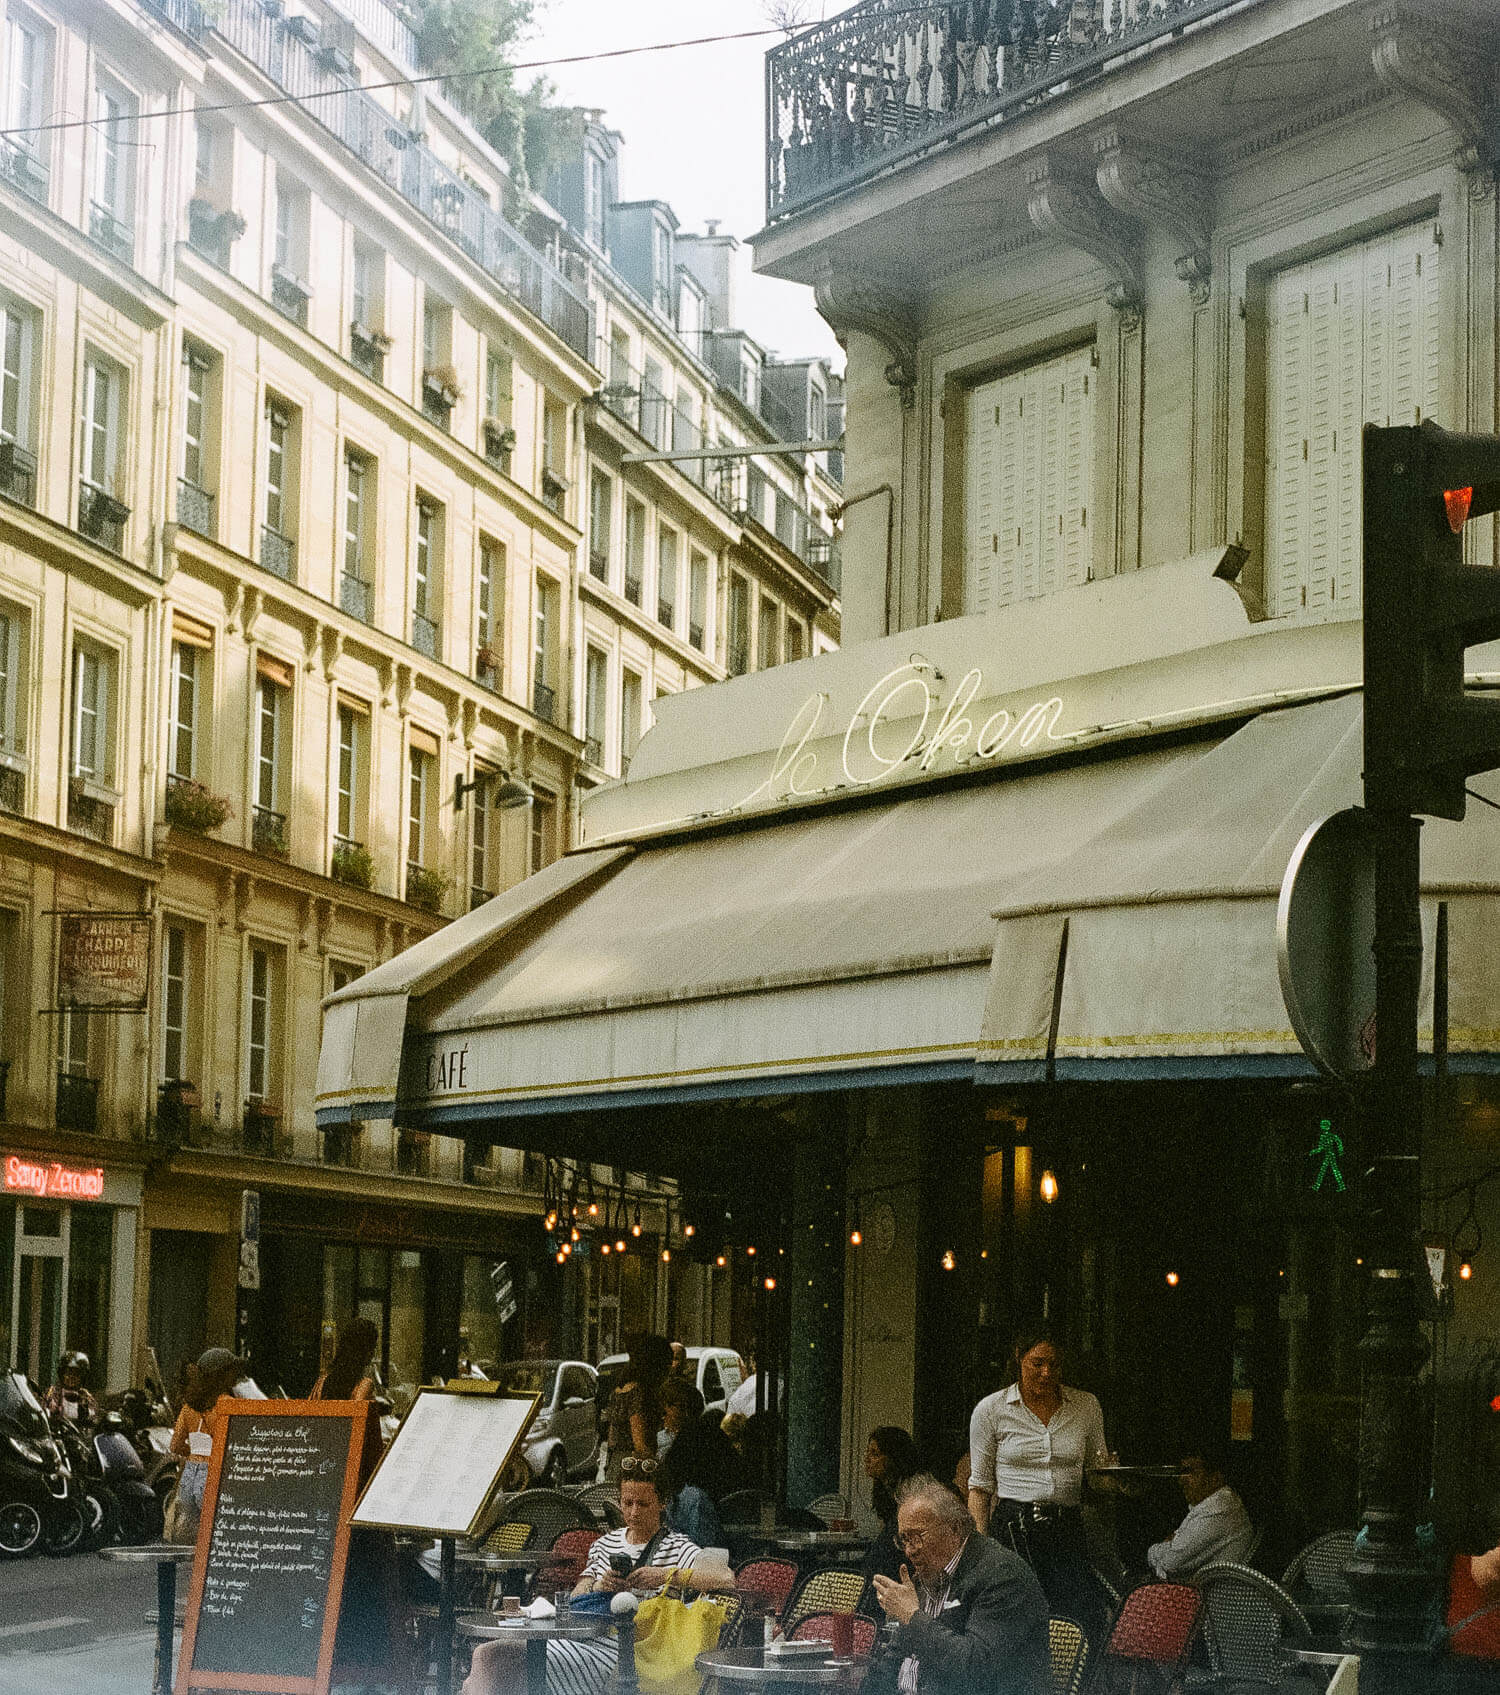 A cafe in Paris